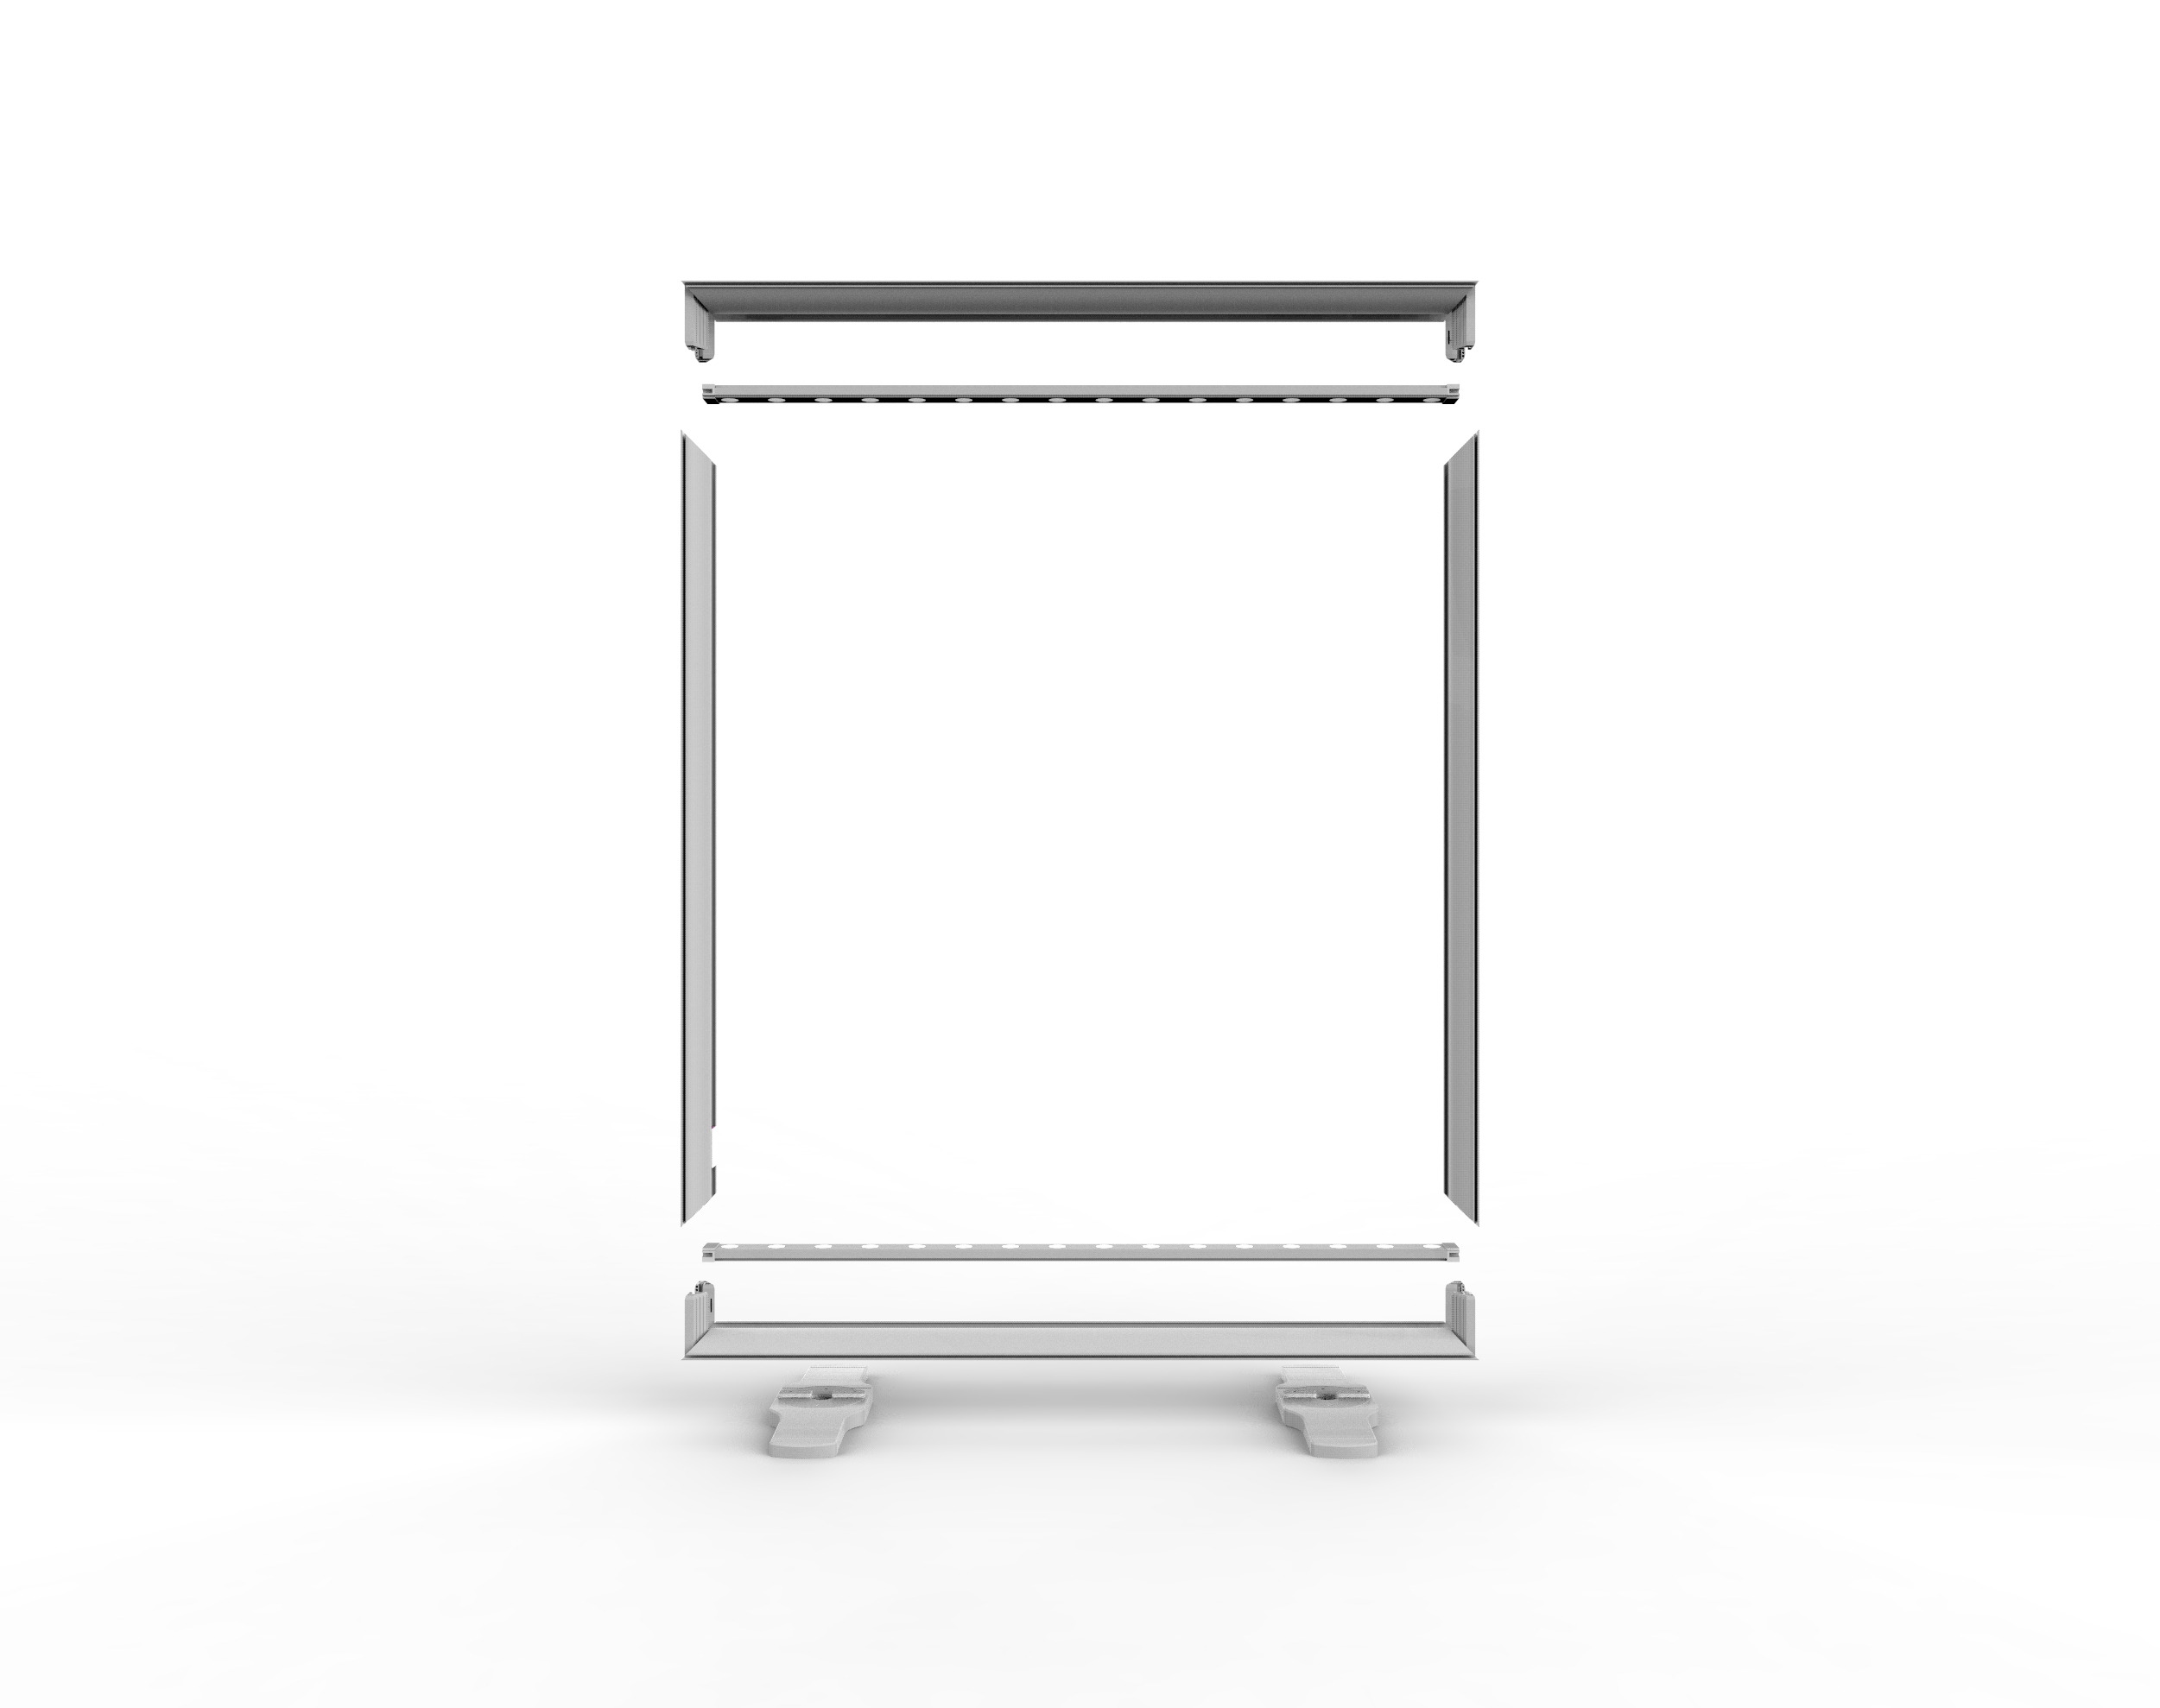 Stable PVC Led Light Box for Advertising Display 2ft*2ft